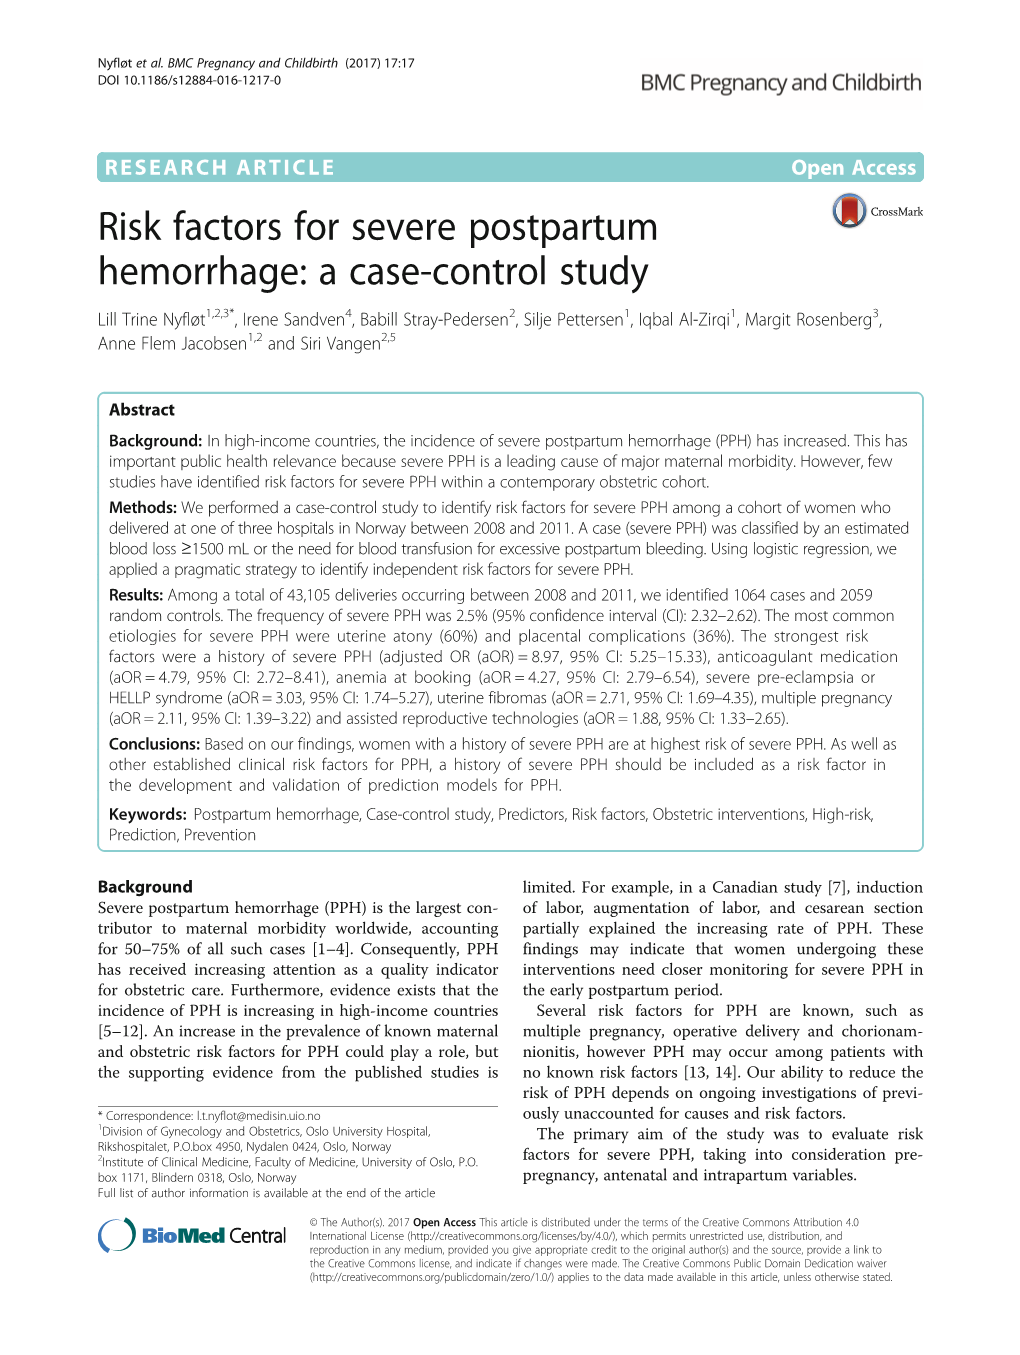 Risk Factors for Severe Postpartum Hemorrhage: a Case-Control Study